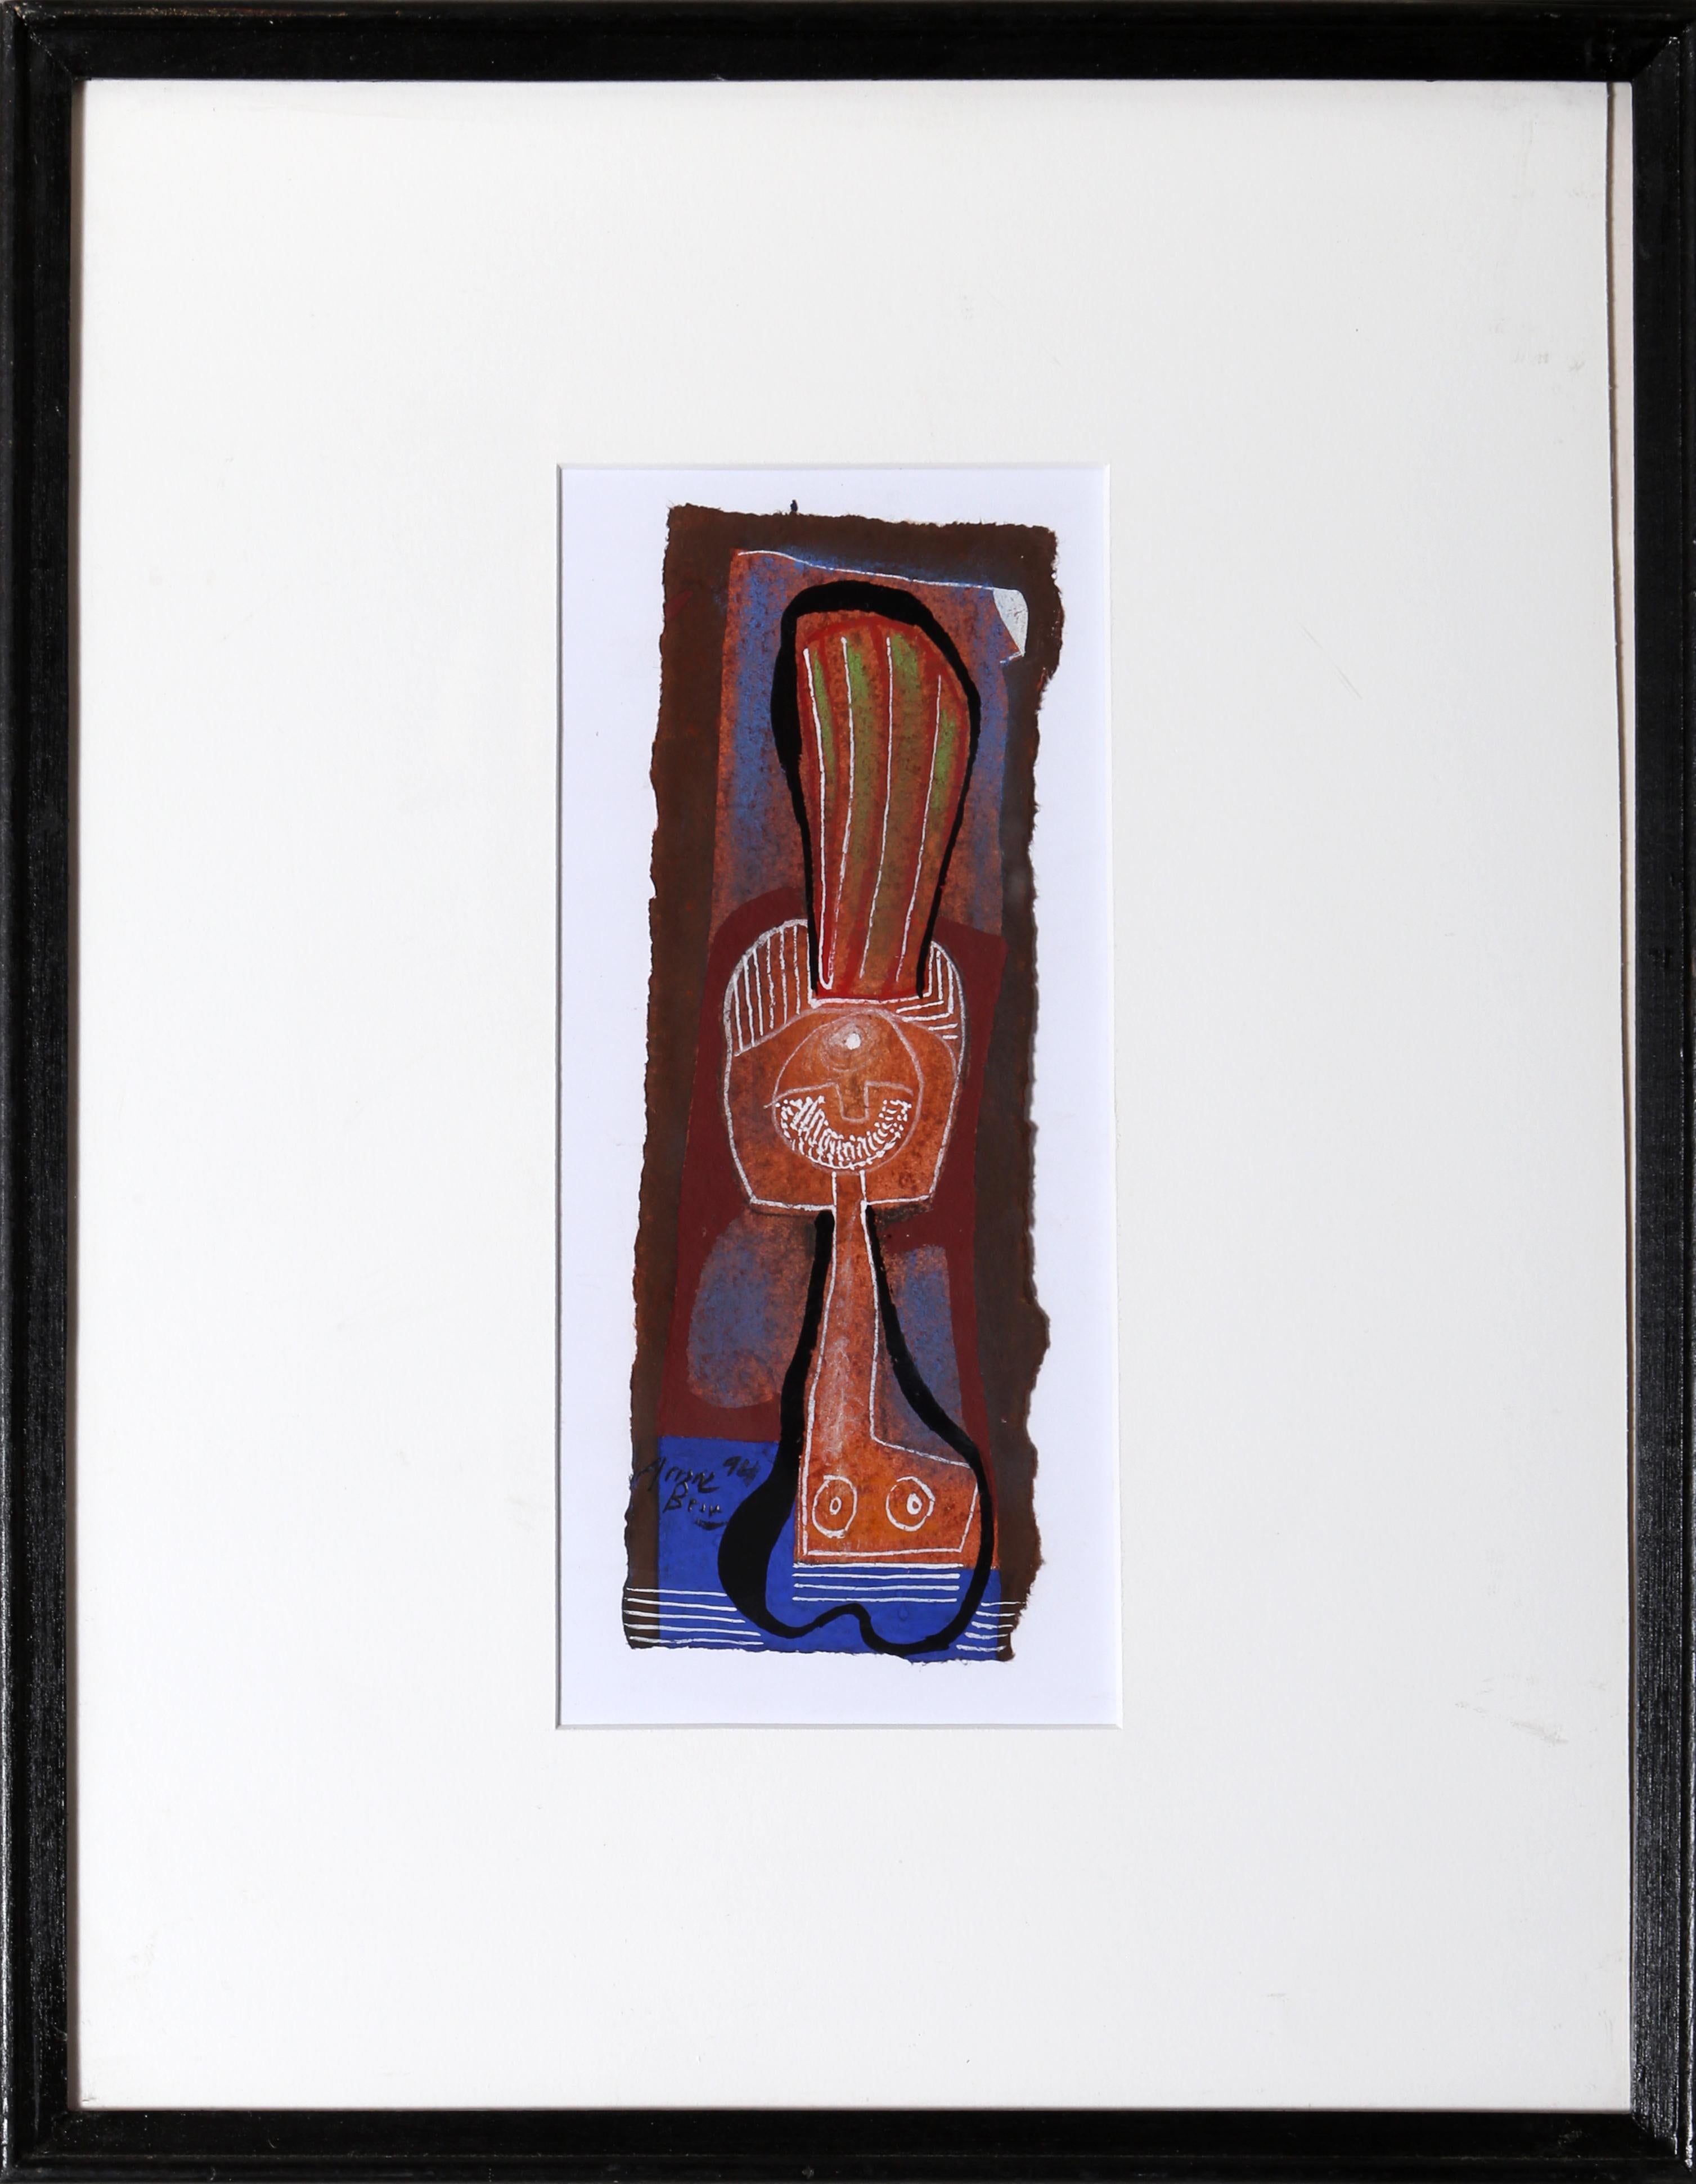 Abstract Mixed Media artwork by Spanish artist Eduardo Arranz-Bravo.

Cadaques No.22
Eduardo Arranz-Bravo, Spanish (1941)
Date: 1994
Mixed Media on Paper, signed lower left
Size: 8 x 2.5 in. (20.32 x 6.35 cm)
Frame Size: 14.75 x 11.75 inches